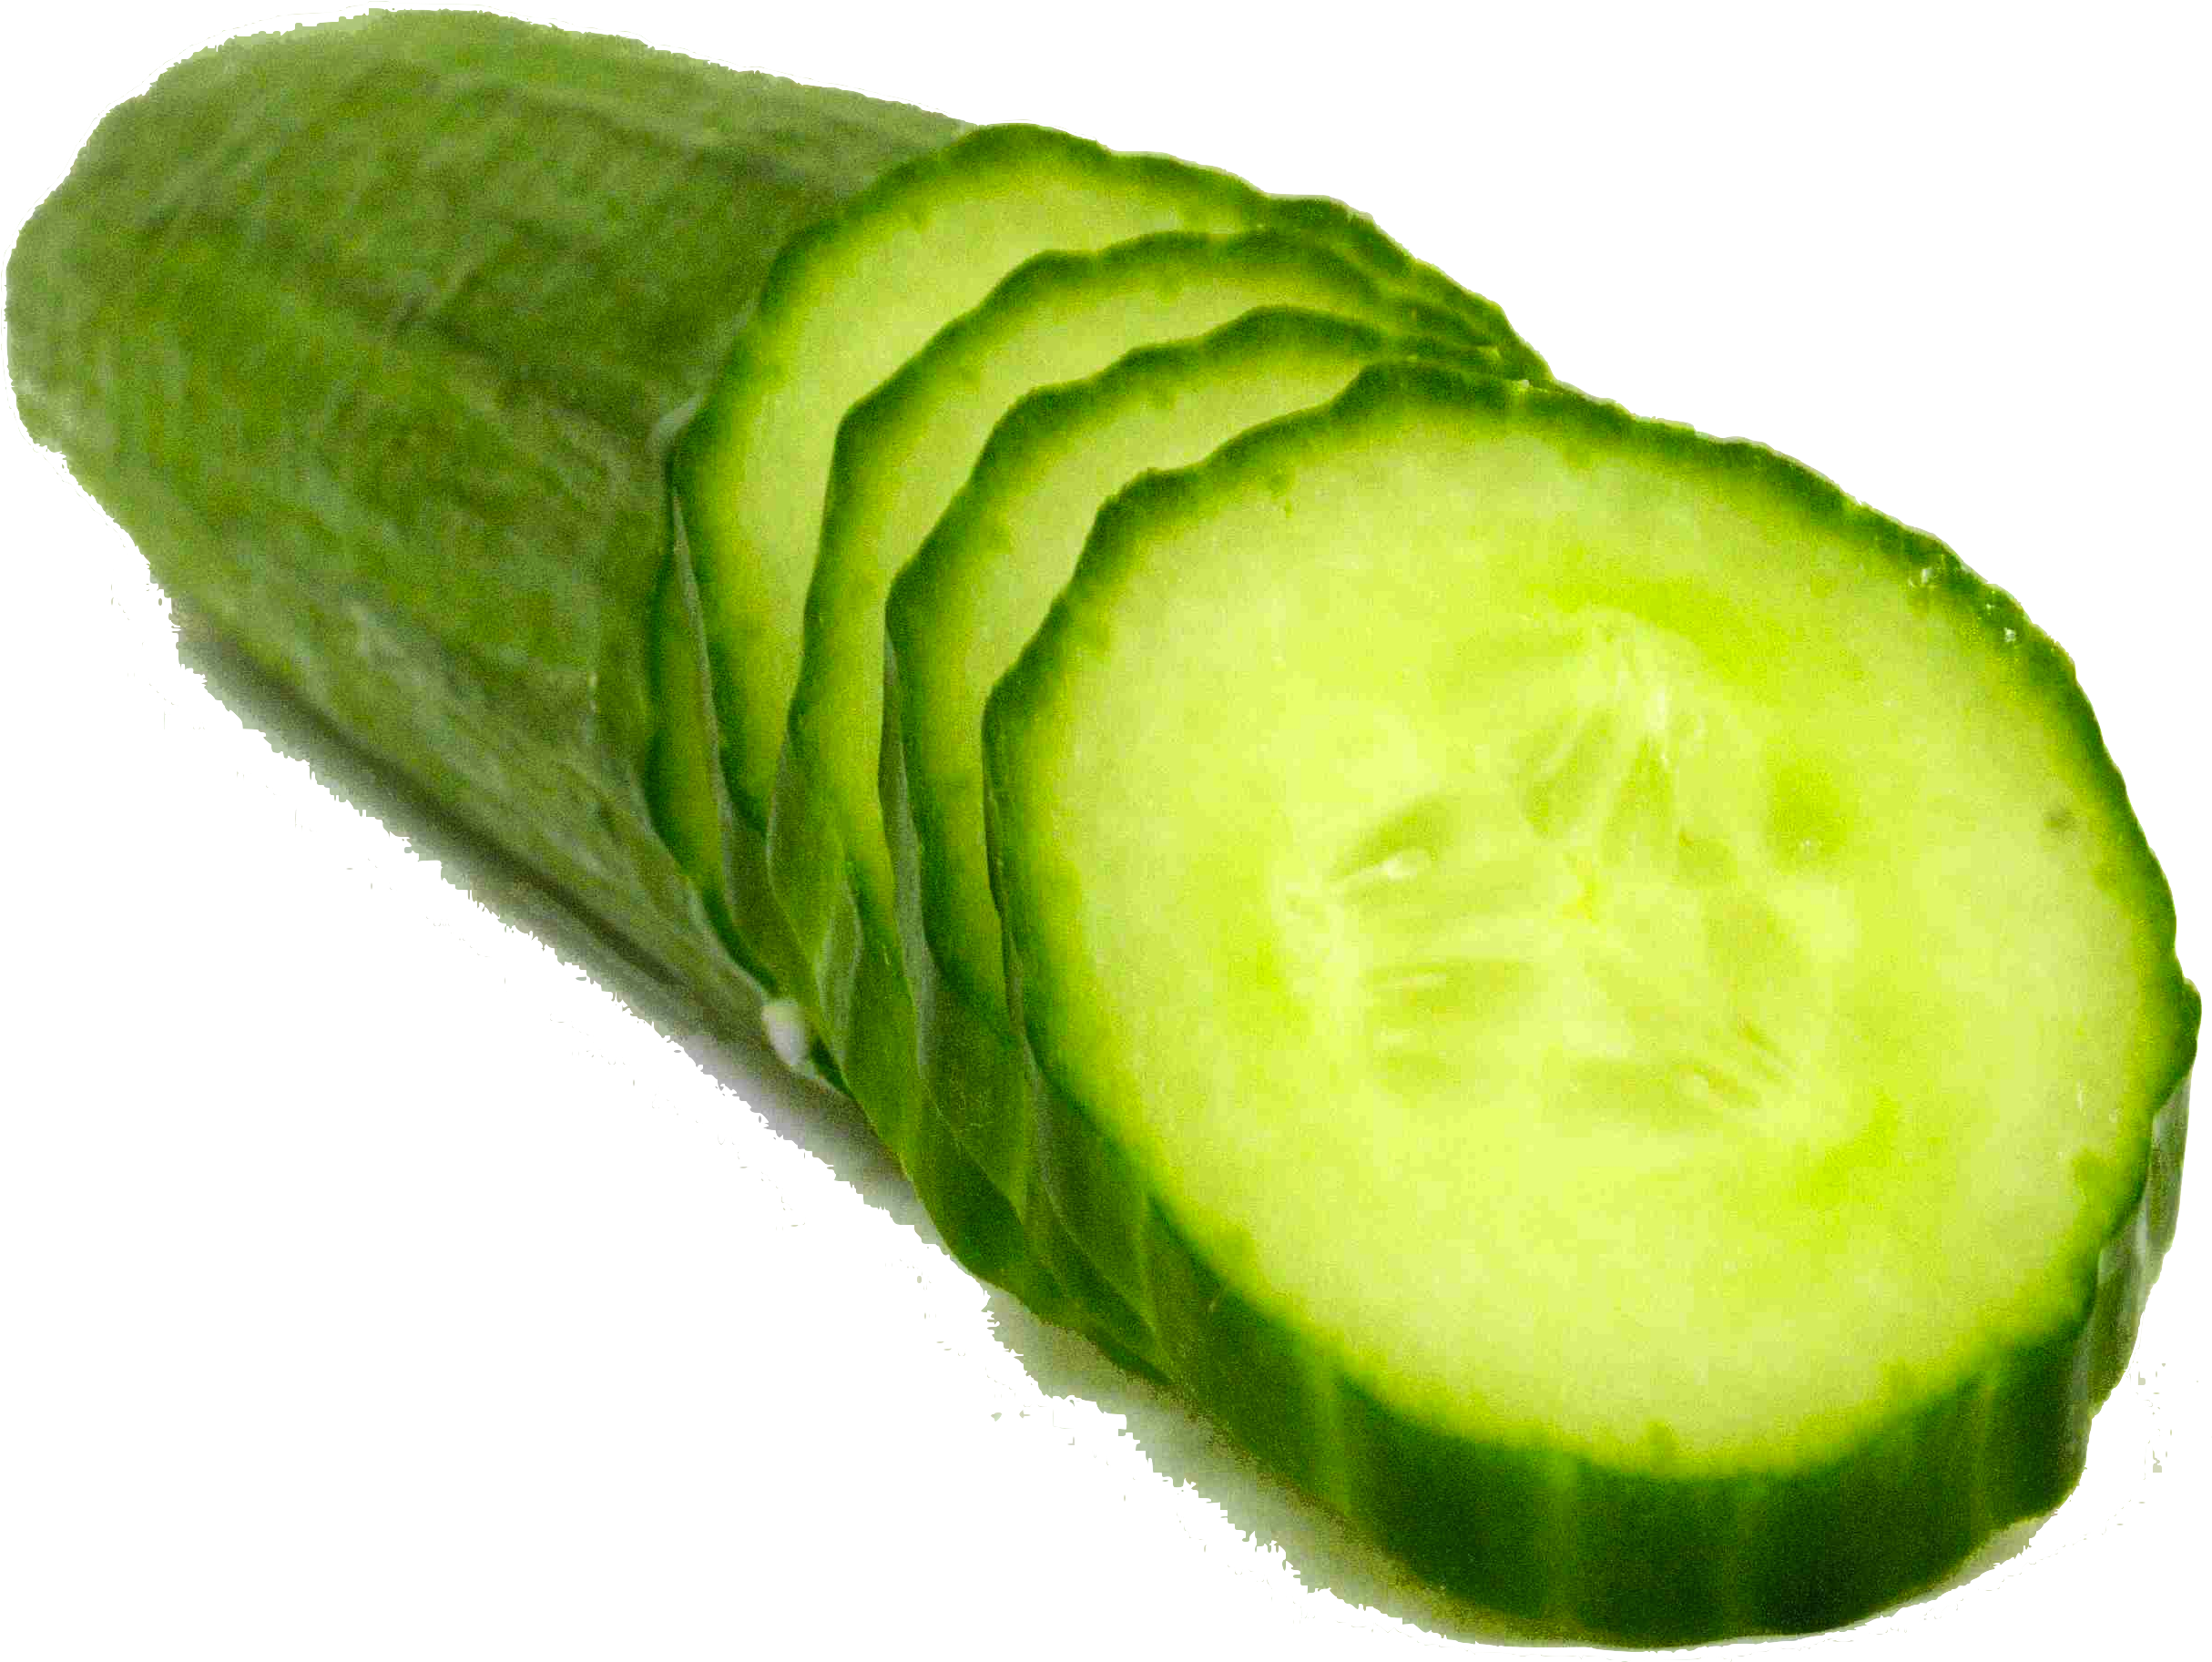 A Cucumber Sliced In A Row